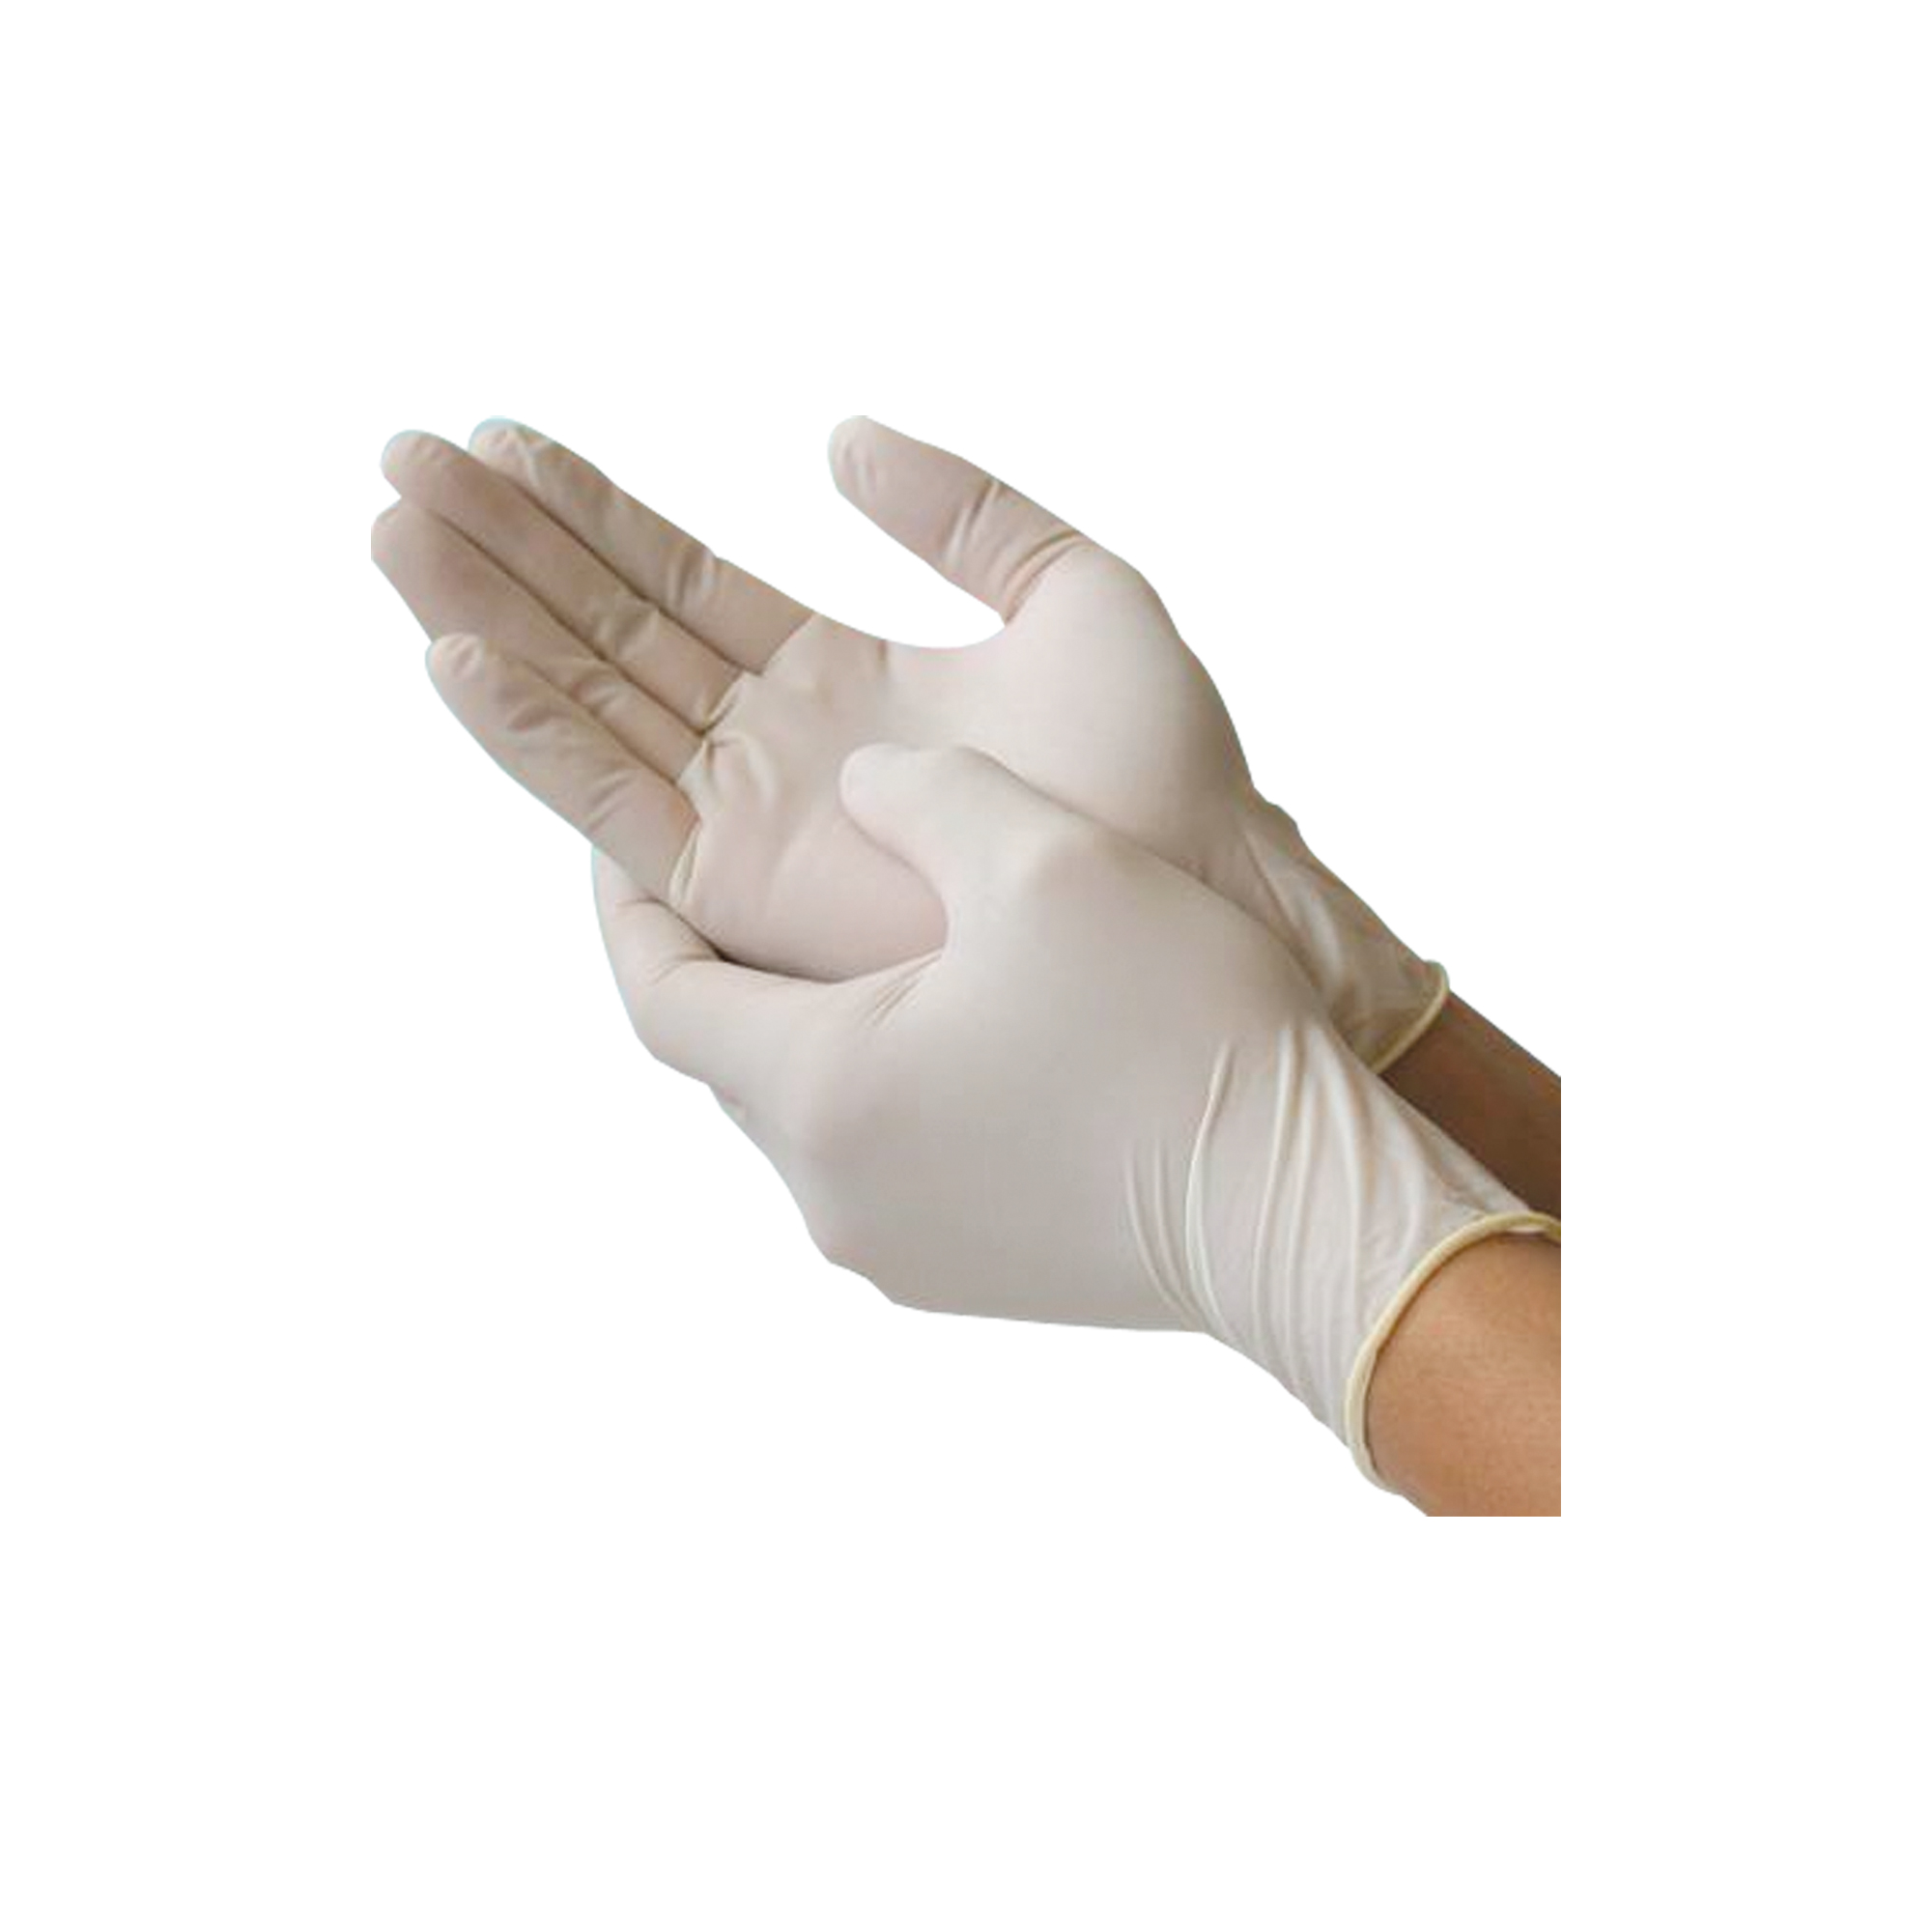 Gloves Vinyl Powder Free Large - Pack 100 - Case 10